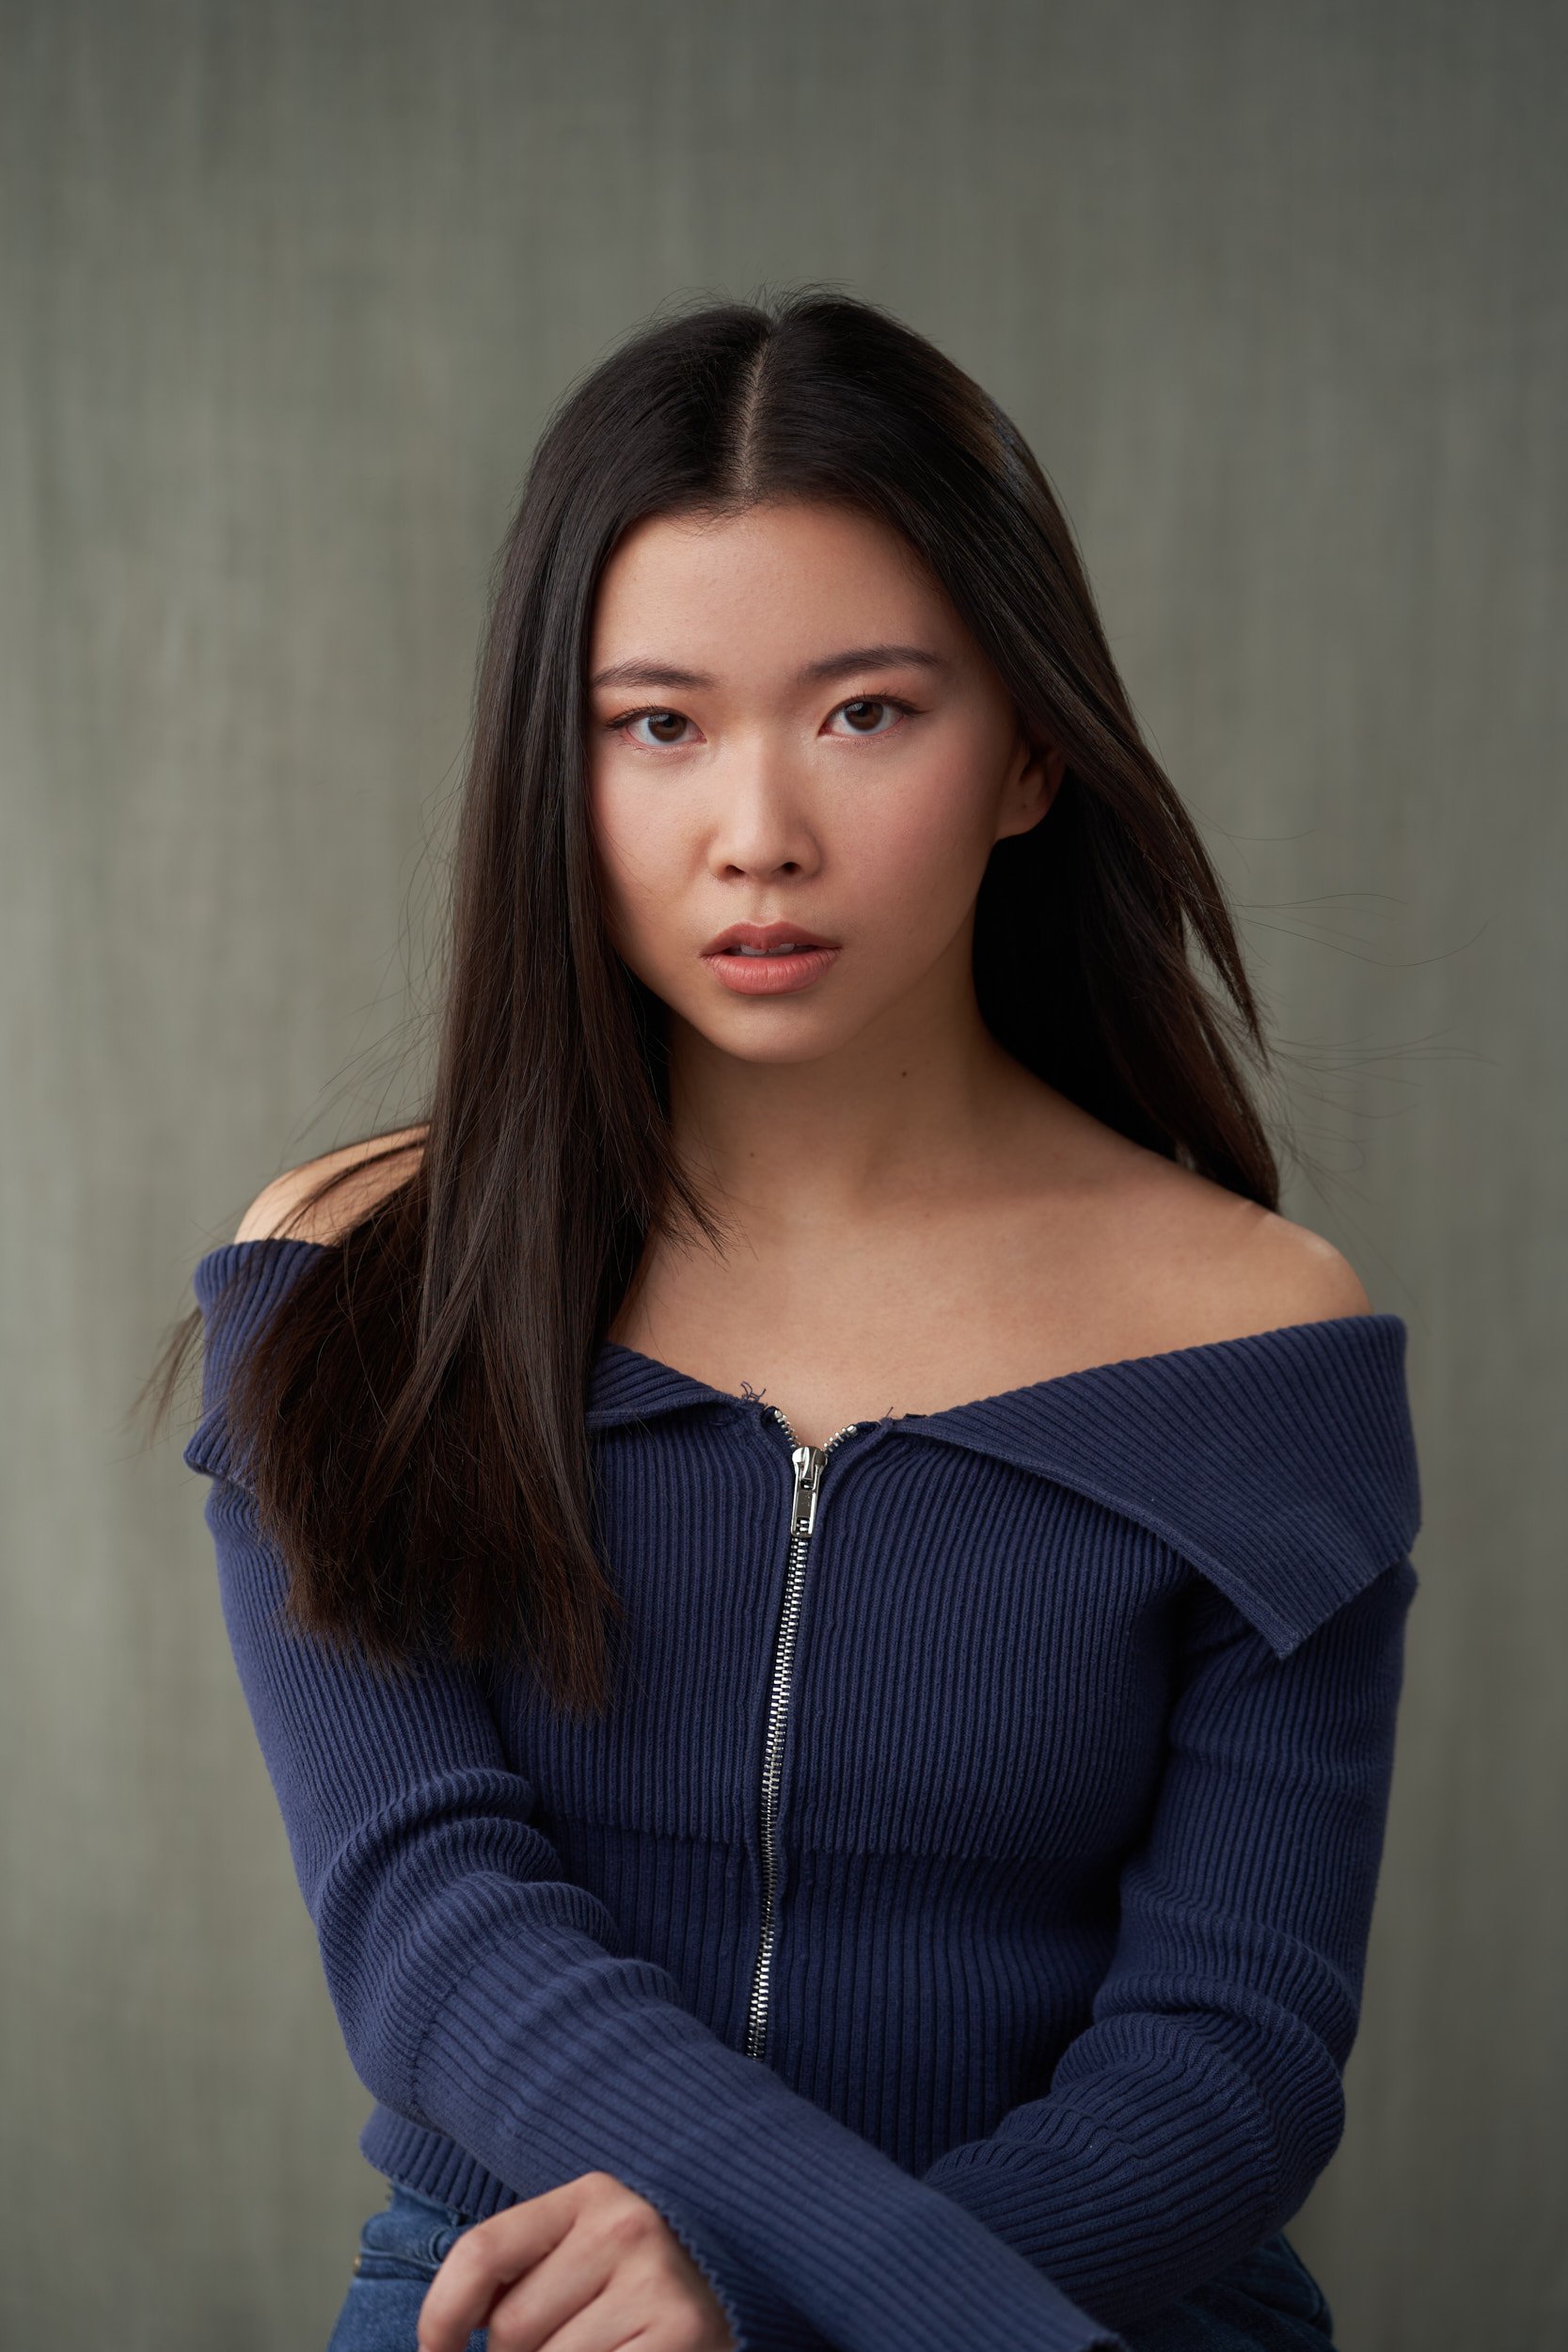  Headshots Matter | Jennifer Chen | Hong Kong Actors Headshots | Portrait Photography 